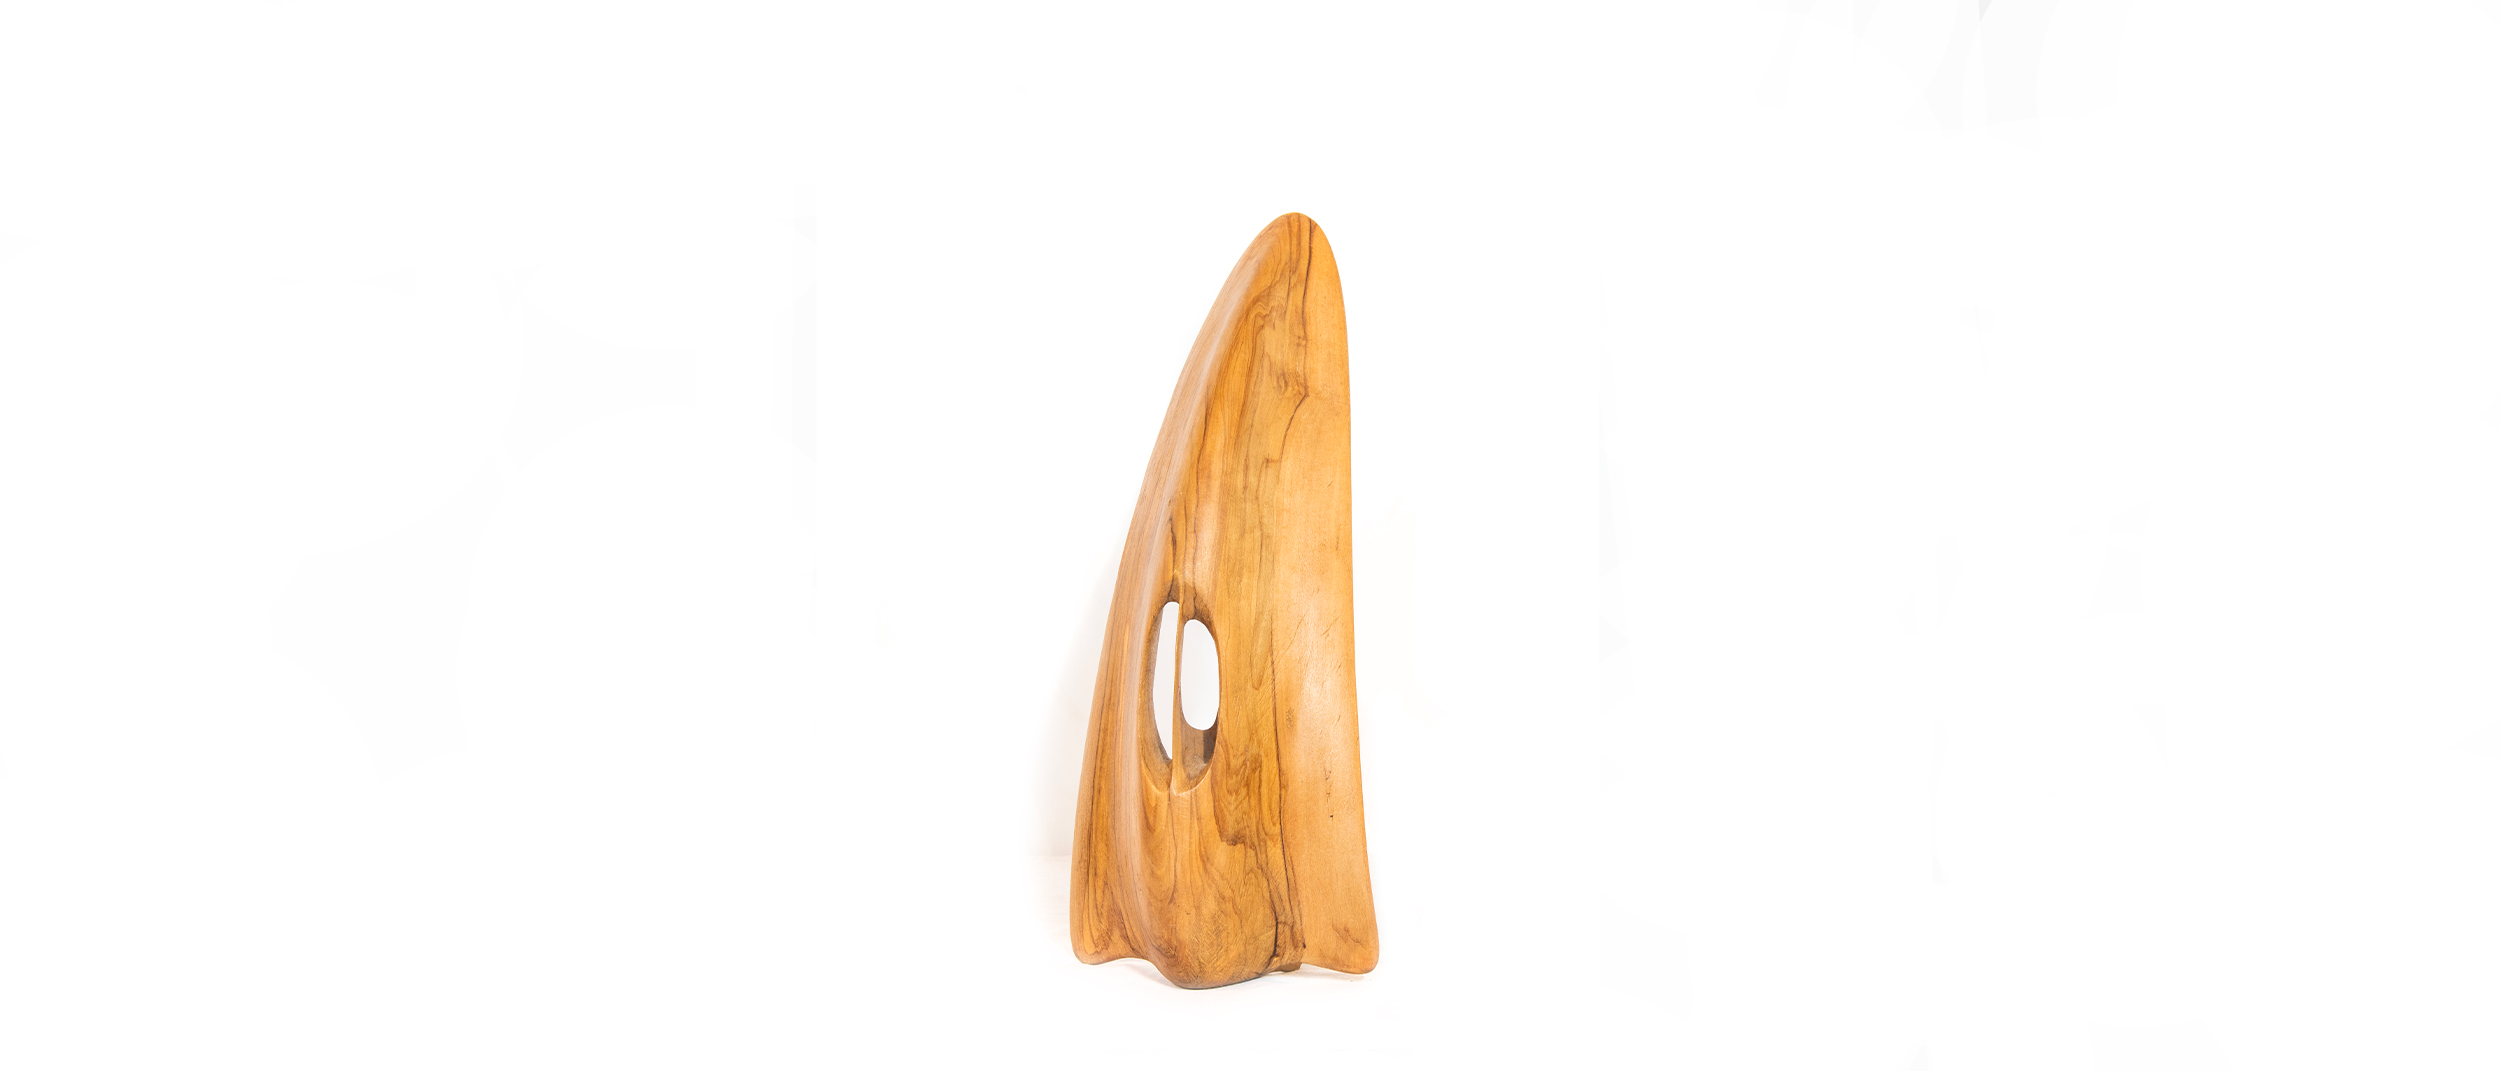 guscio scultura in legno di ulivo arte moderna gianfranco fracassi 003 GF